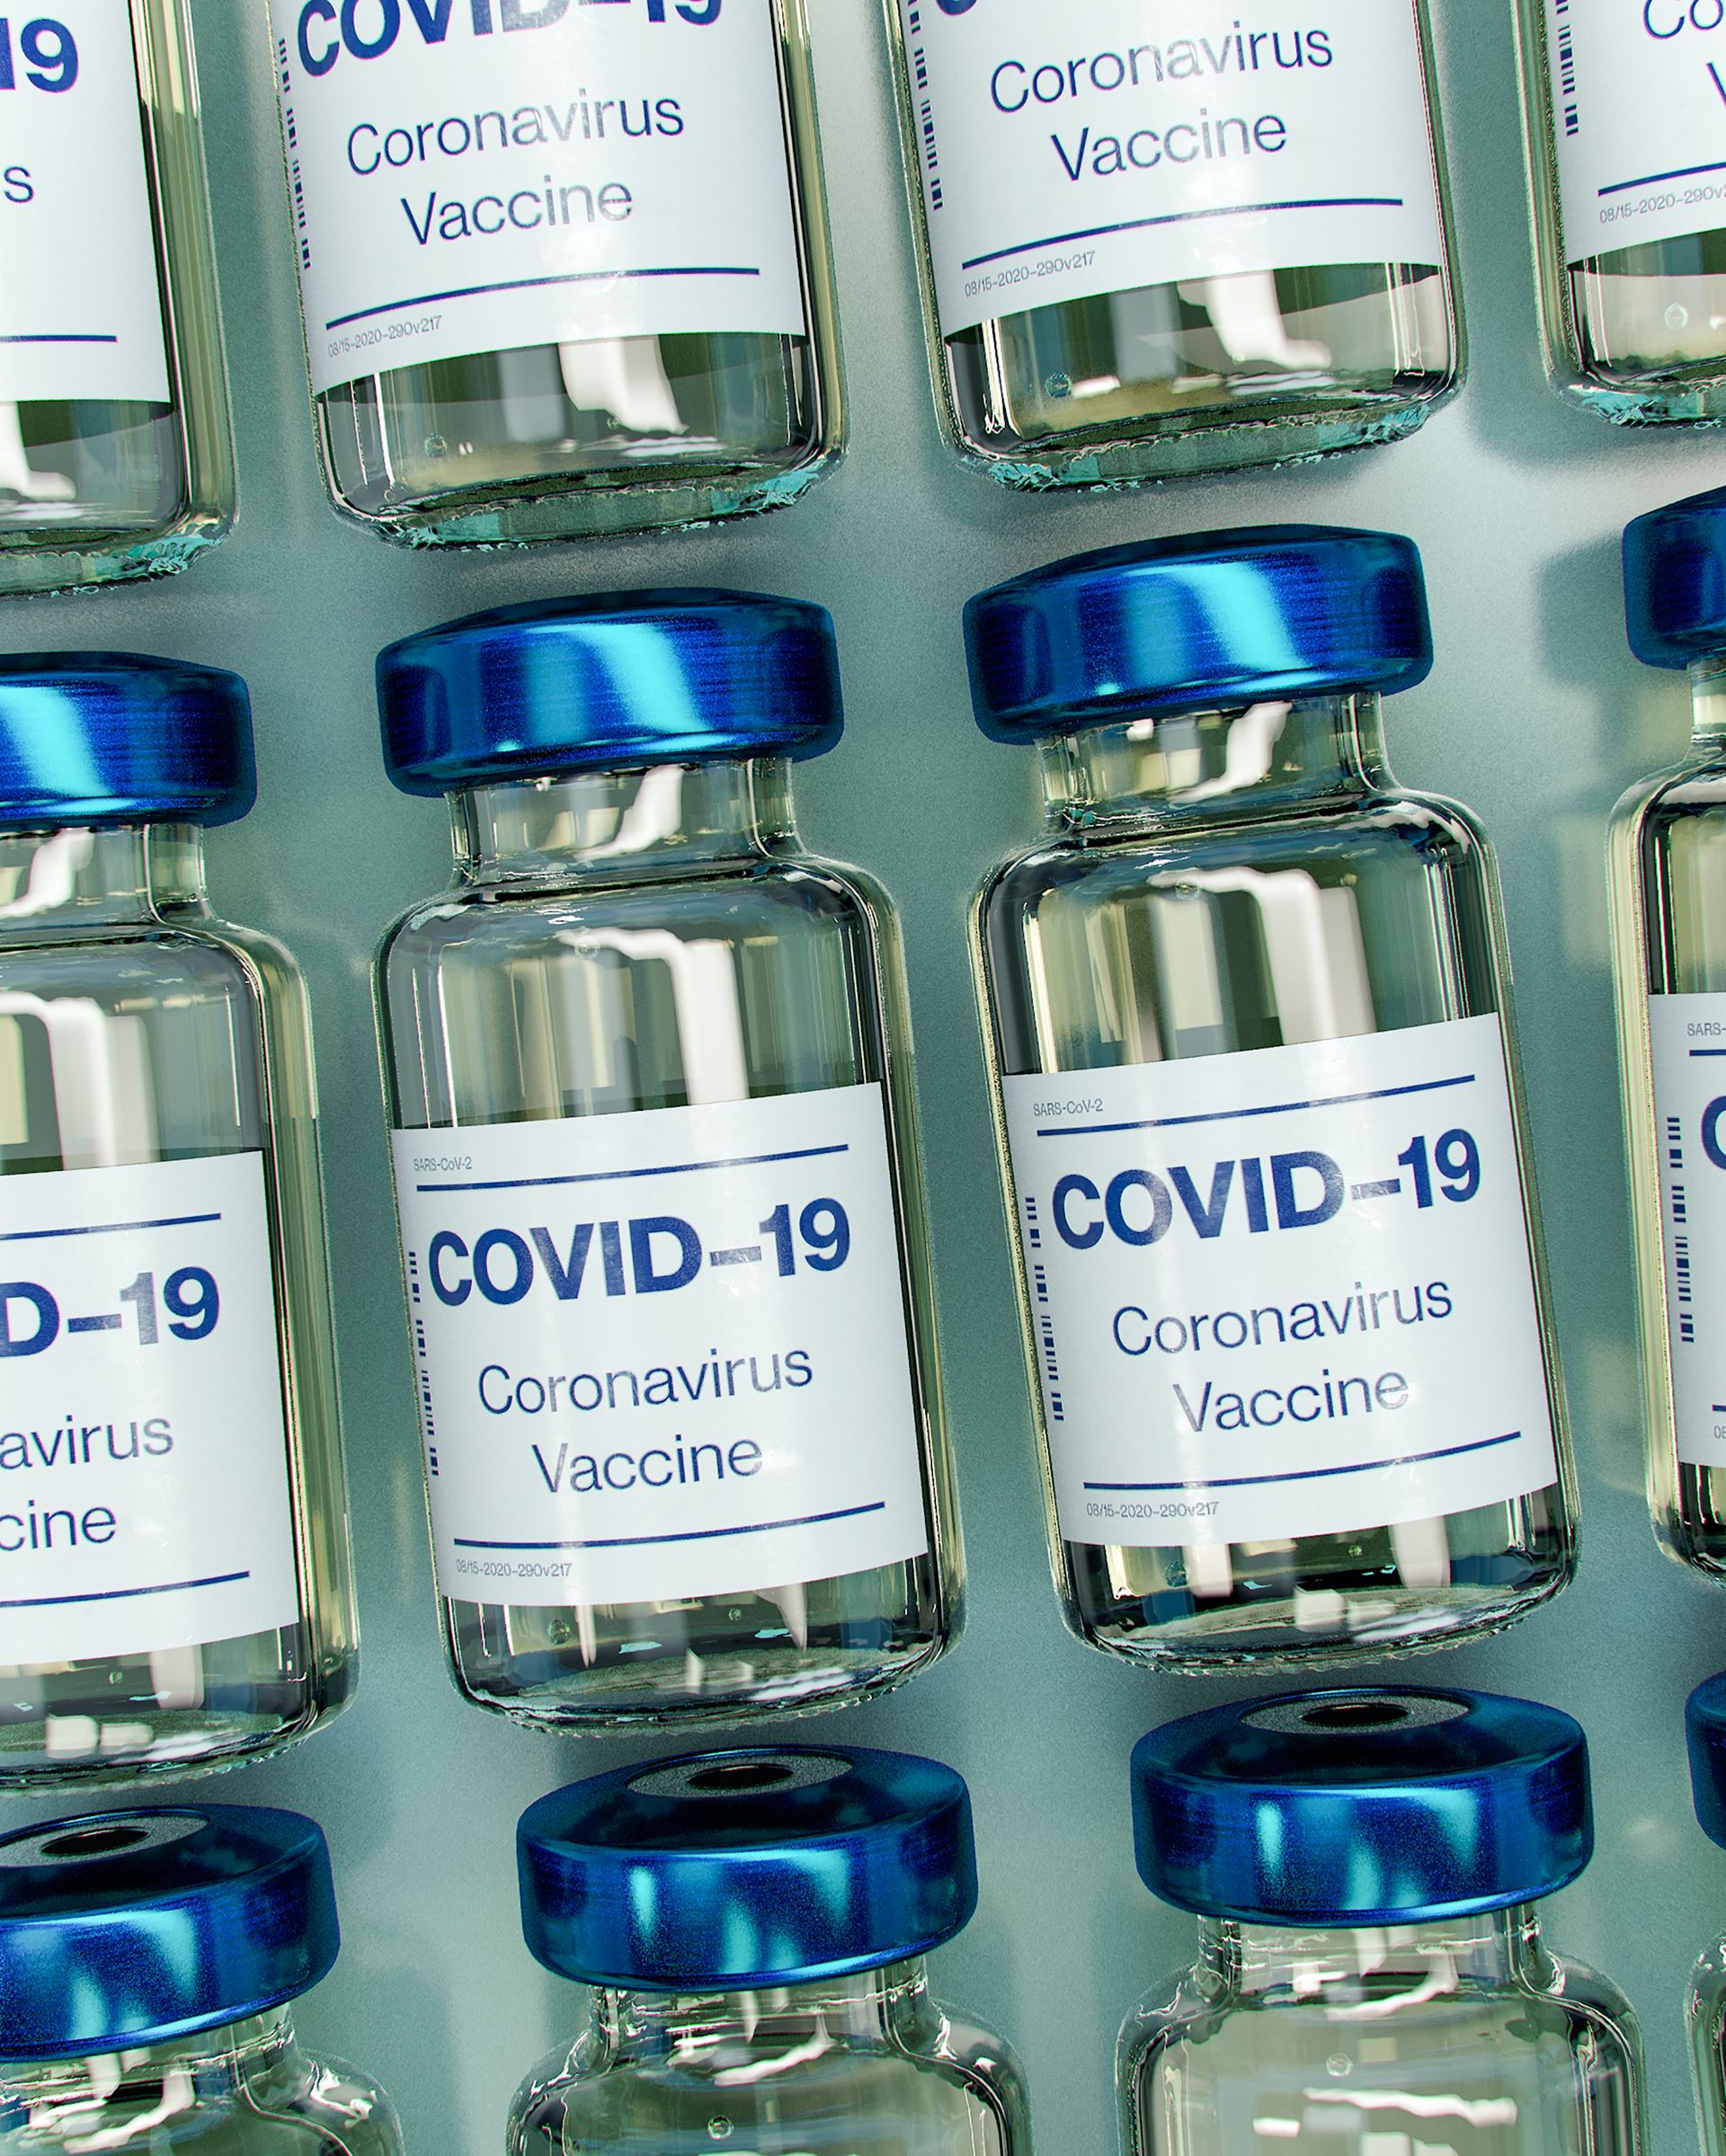 Vials of covid-19 vaccine